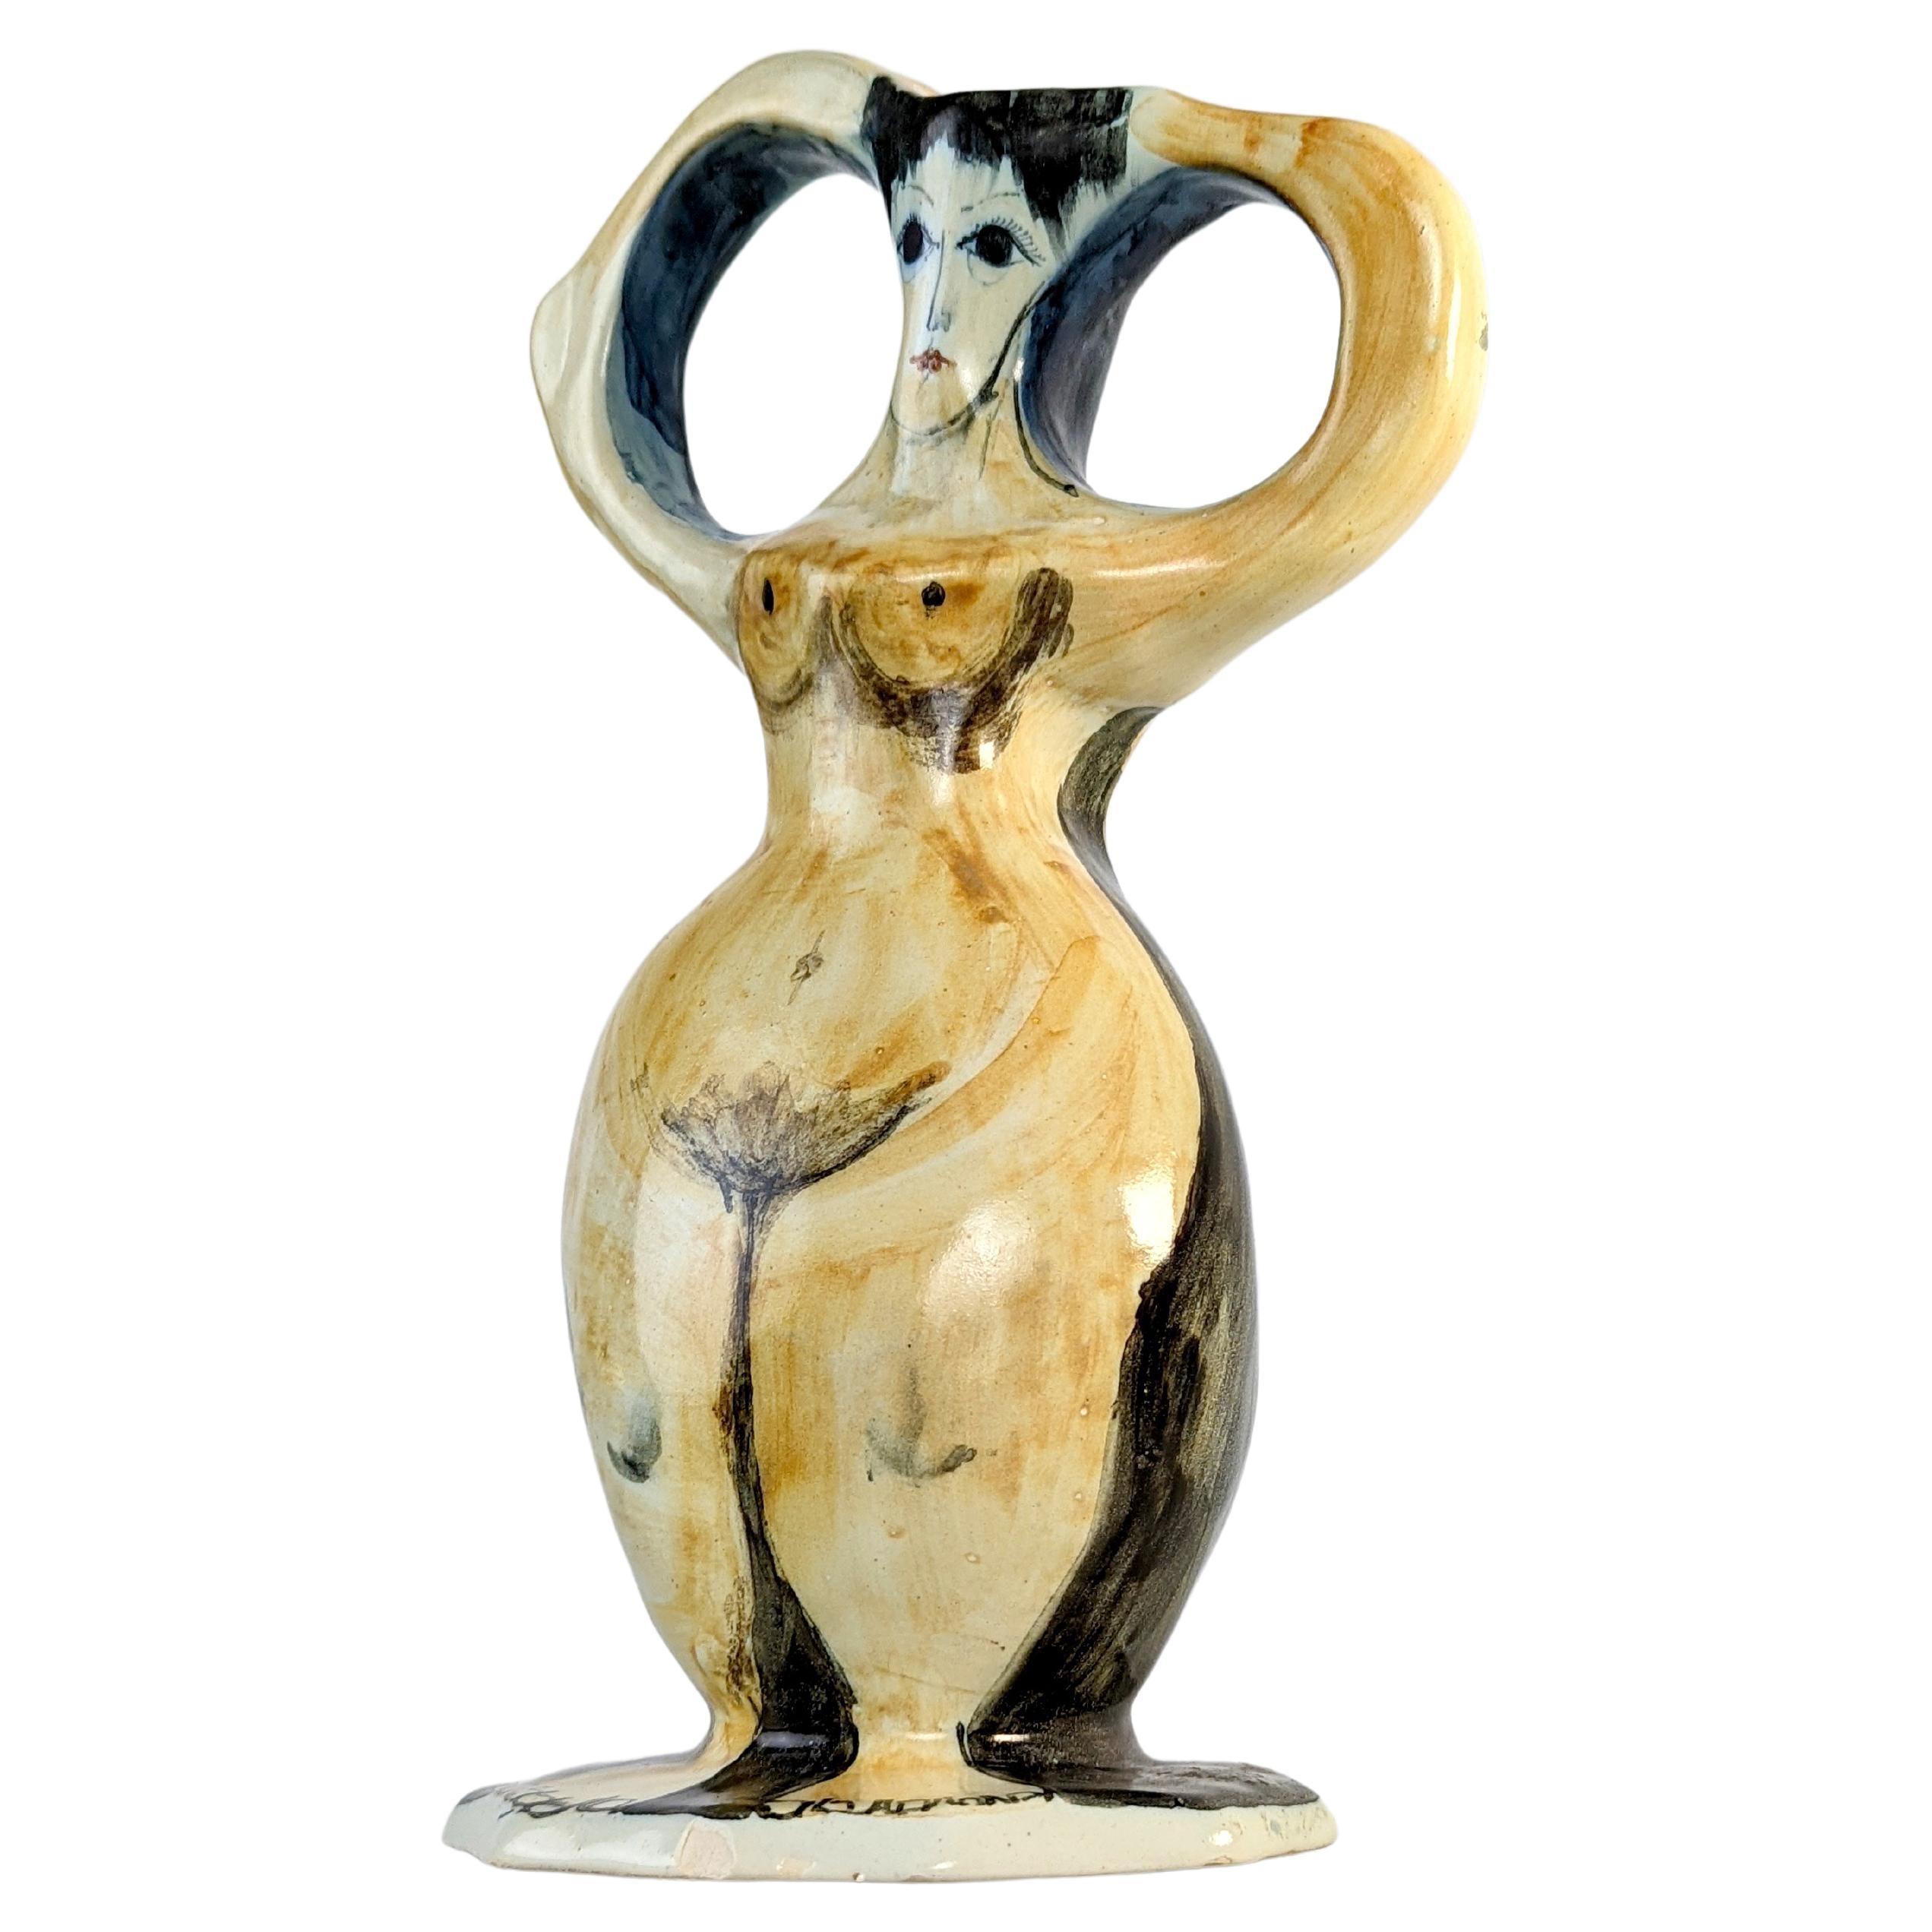 Sulpture-Vase in Form einer Frau